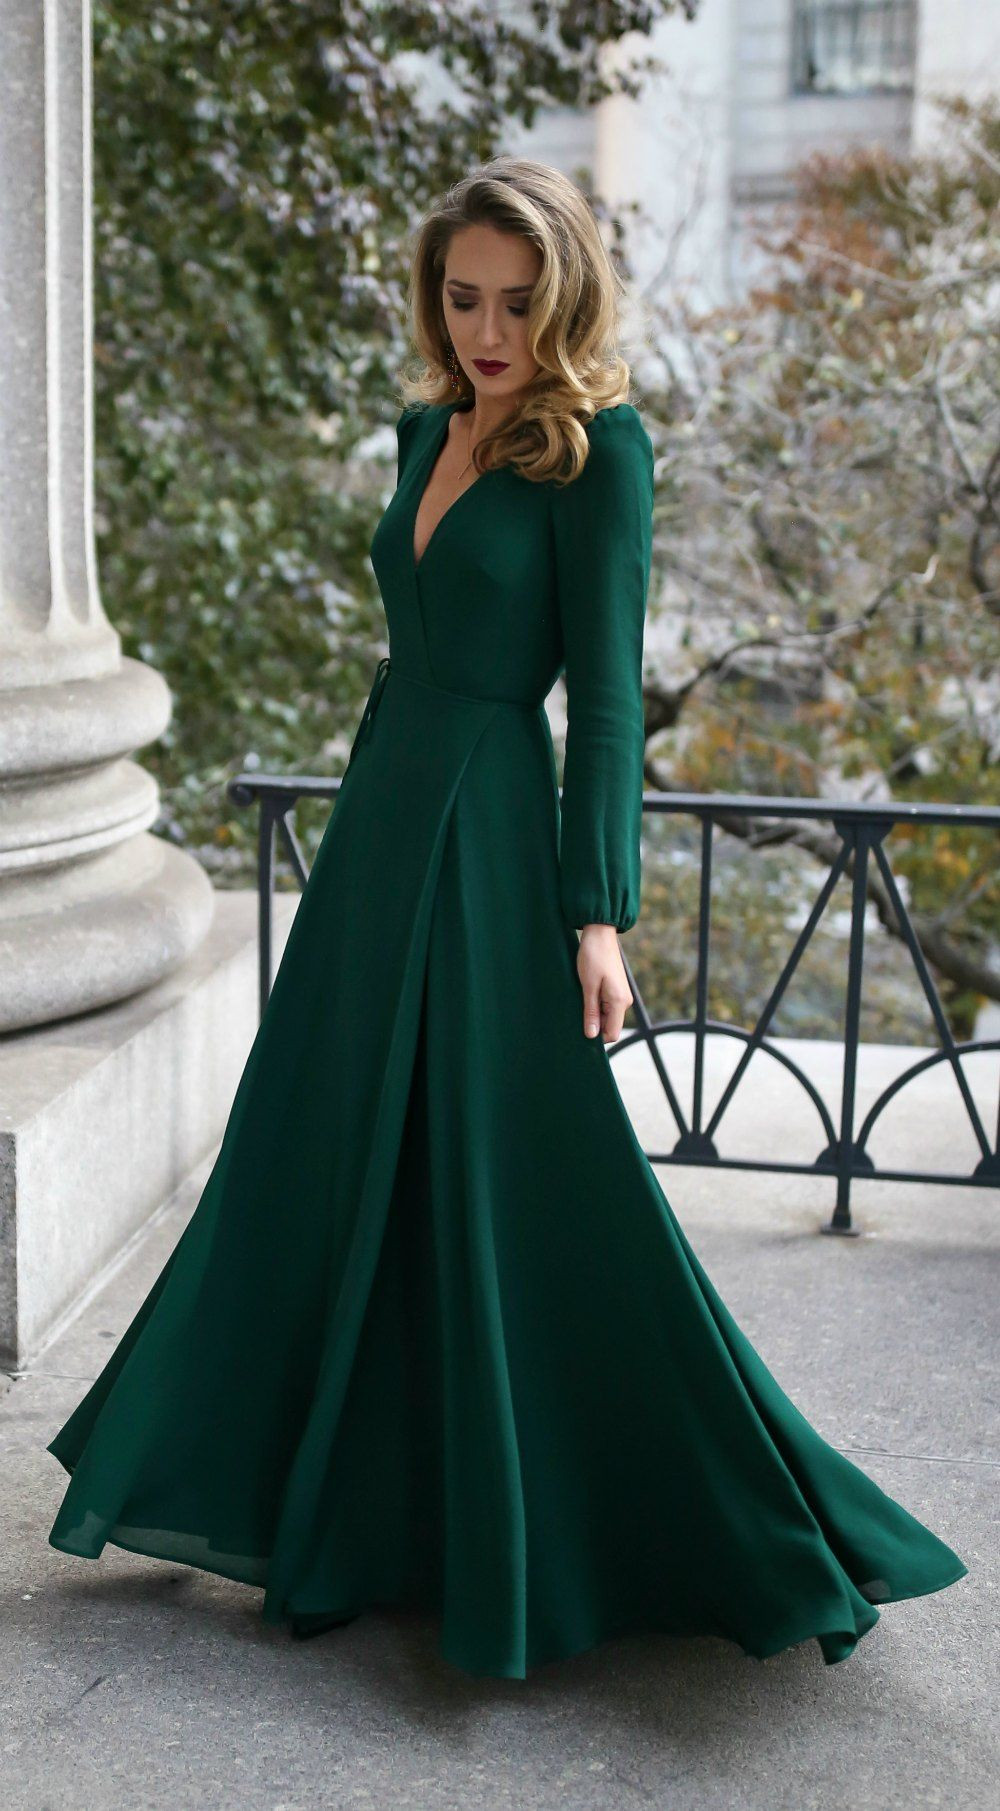 Green Wedding Gowns
 30 DRESSES IN 30 DAYS Black Tie Wedding Guest Emerald